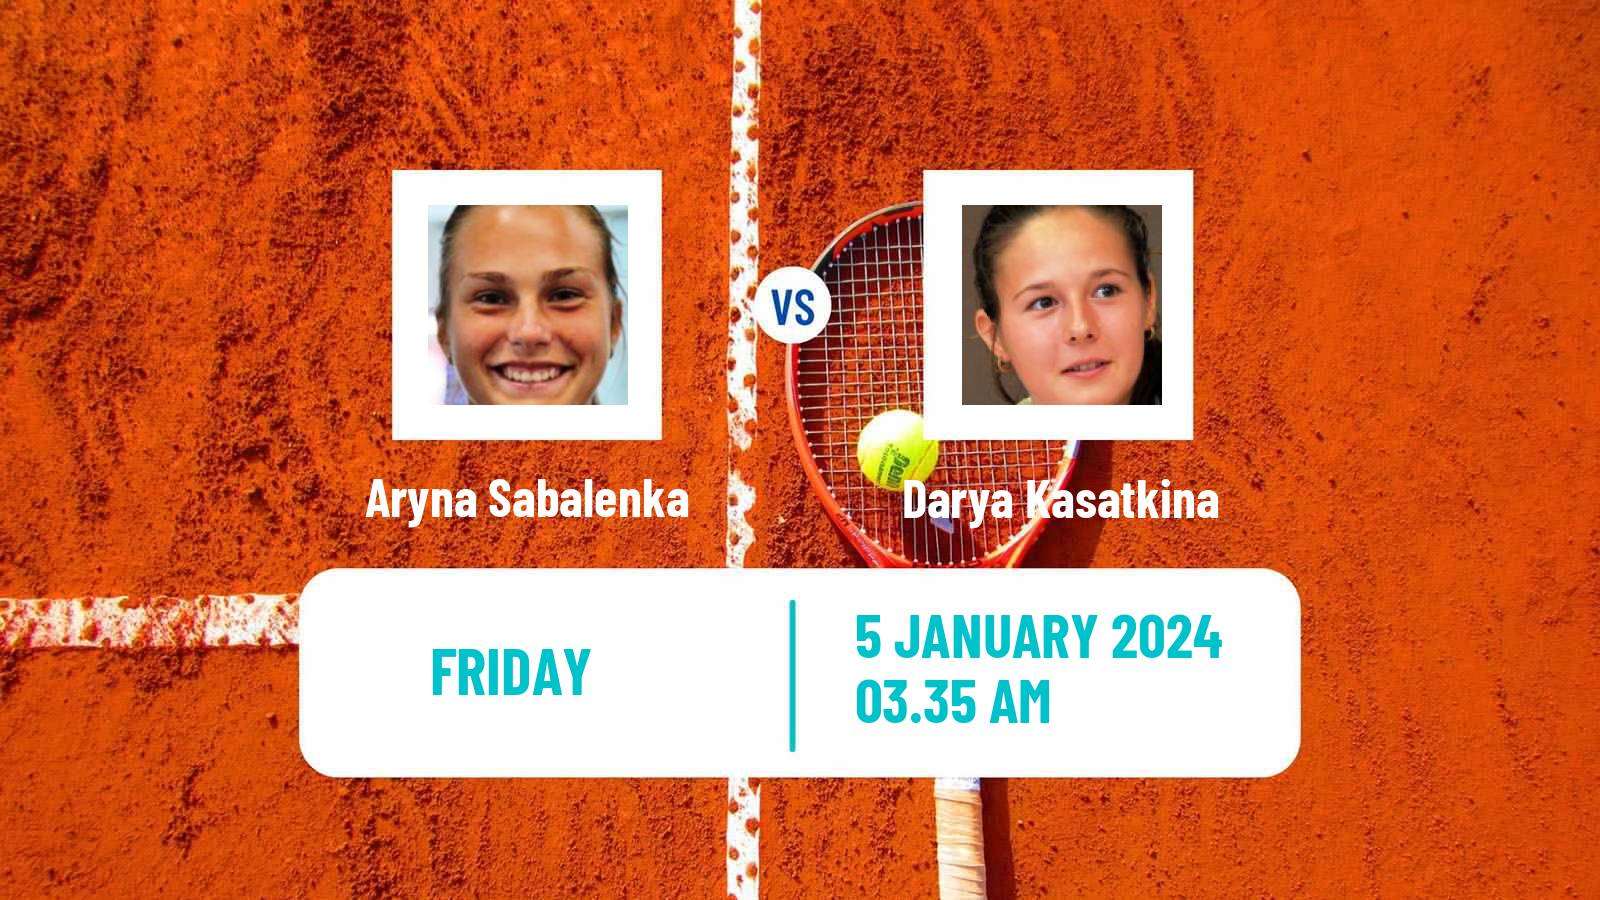 Tennis WTA Brisbane Aryna Sabalenka - Darya Kasatkina